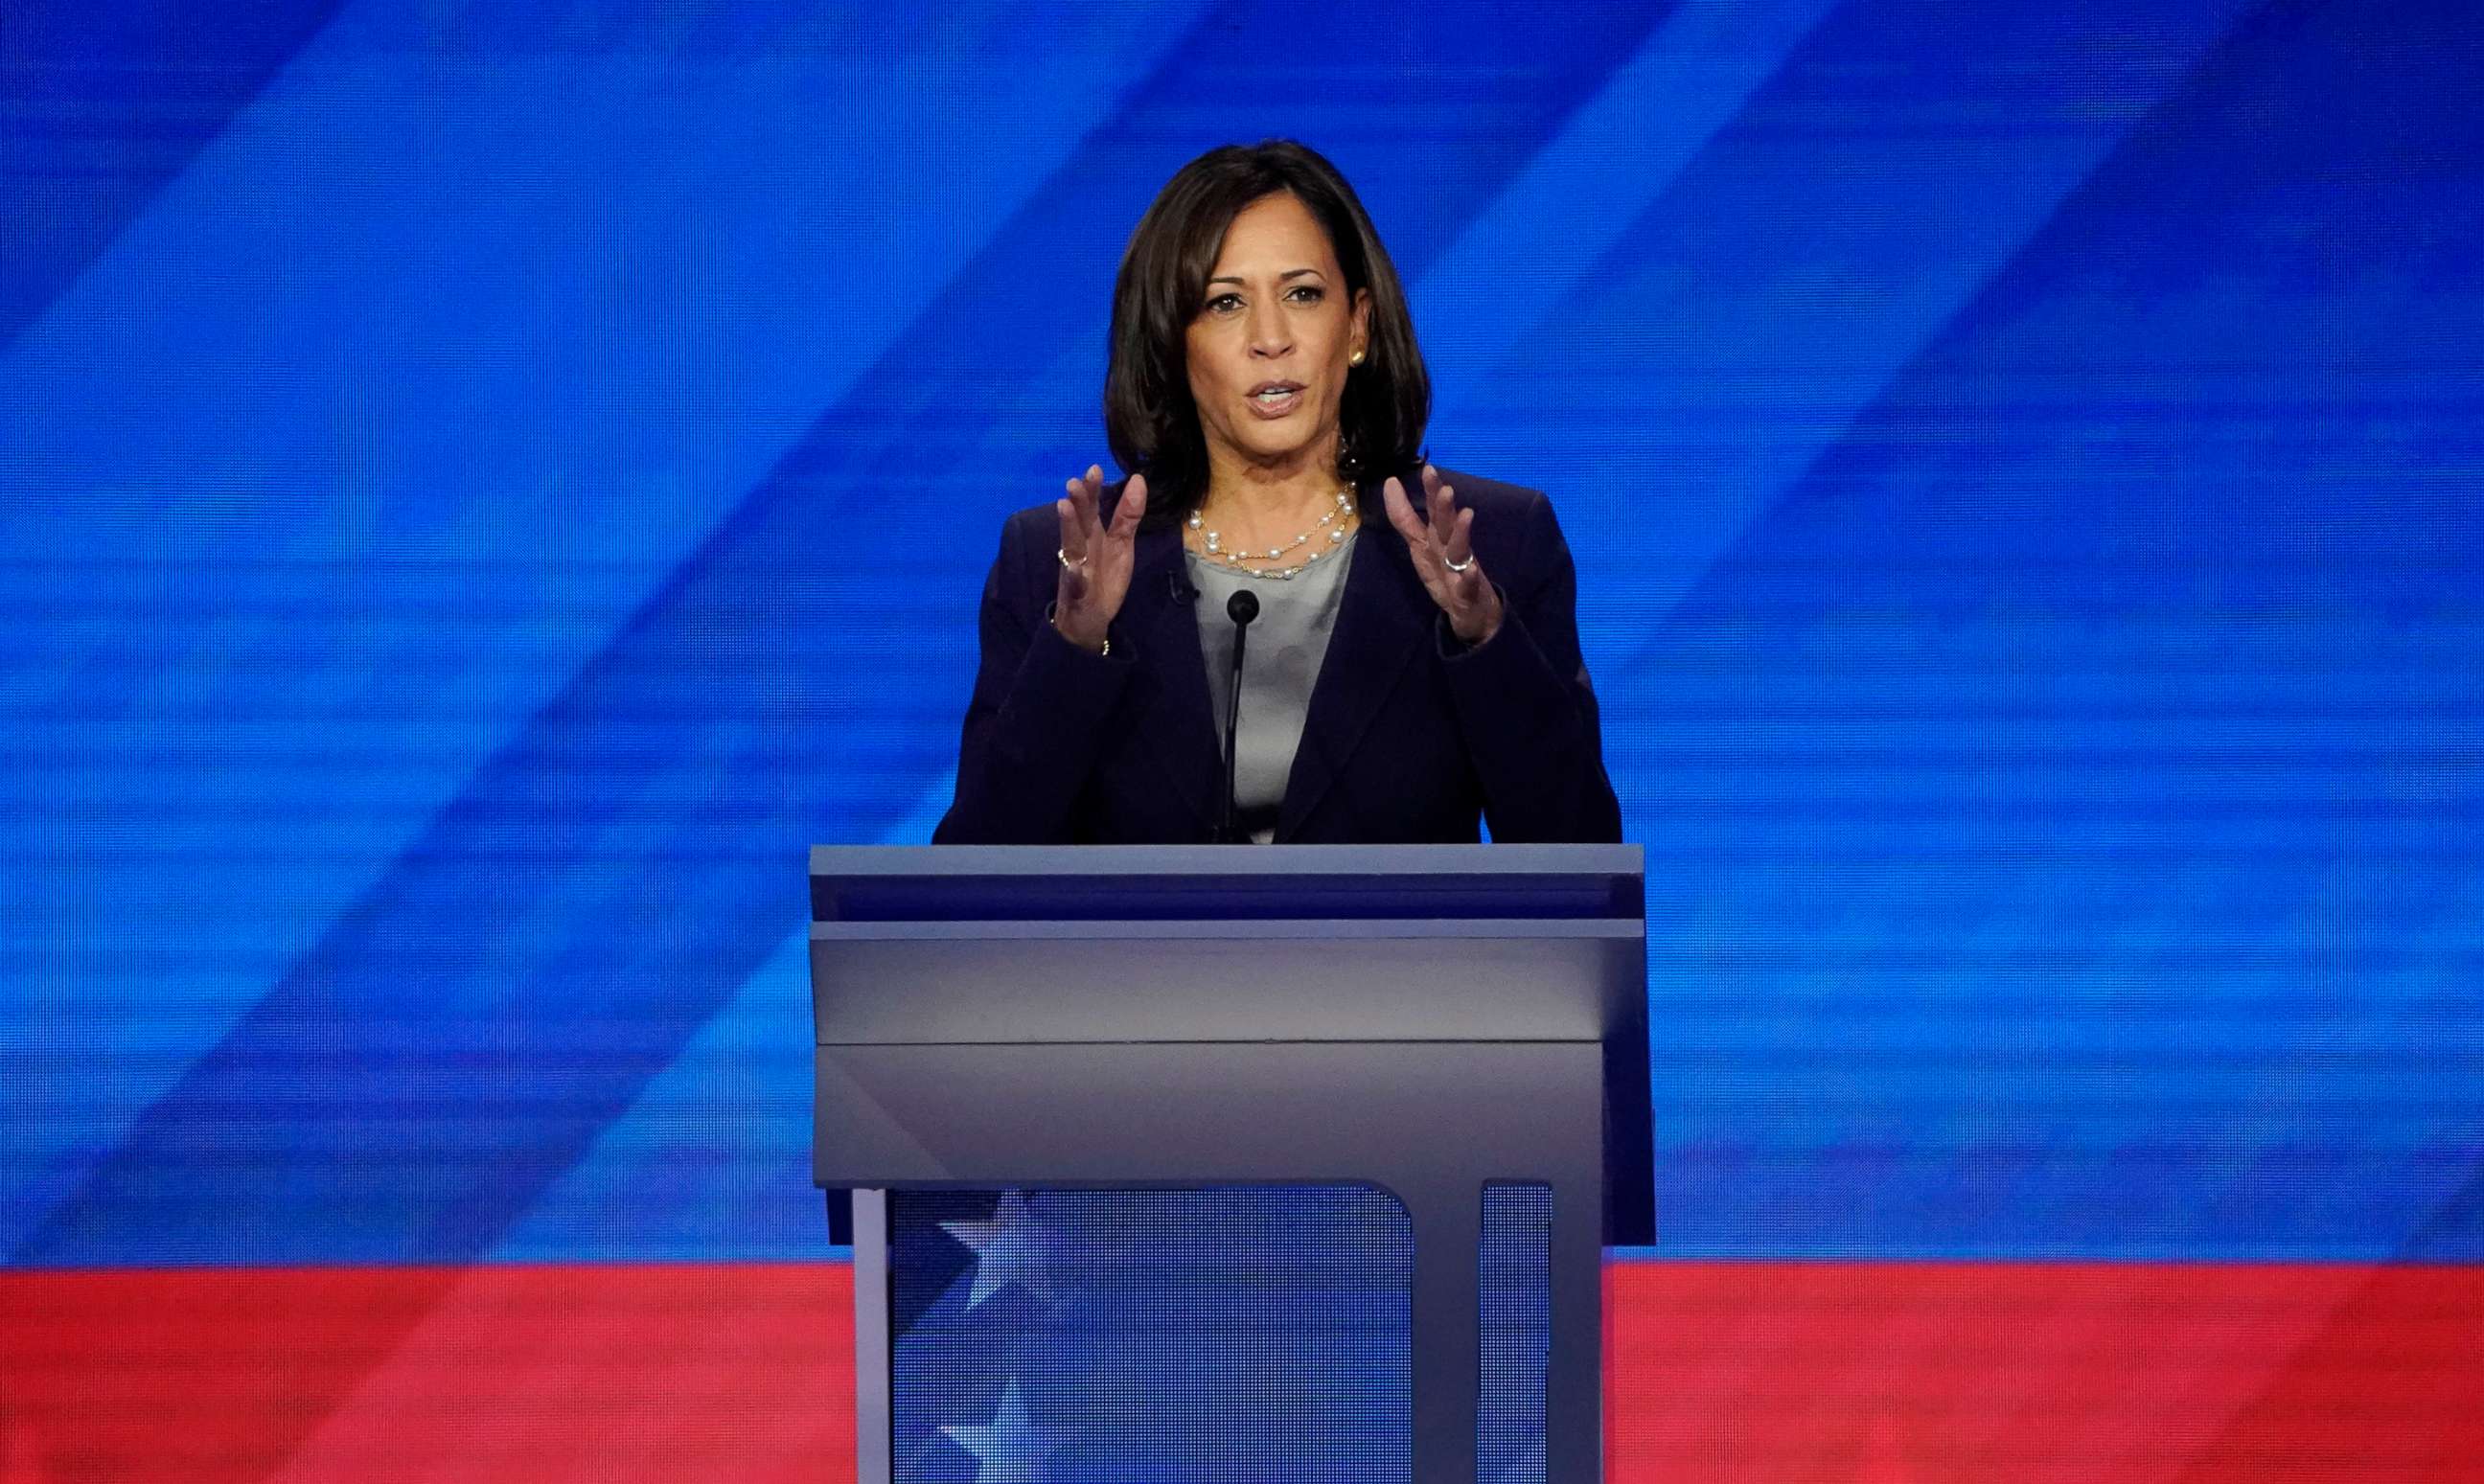 PHOTO: Senator Kamala Harris speaks during the 2020 Democratic presidential debate in Houston, Texas, Sept. 12, 2019.